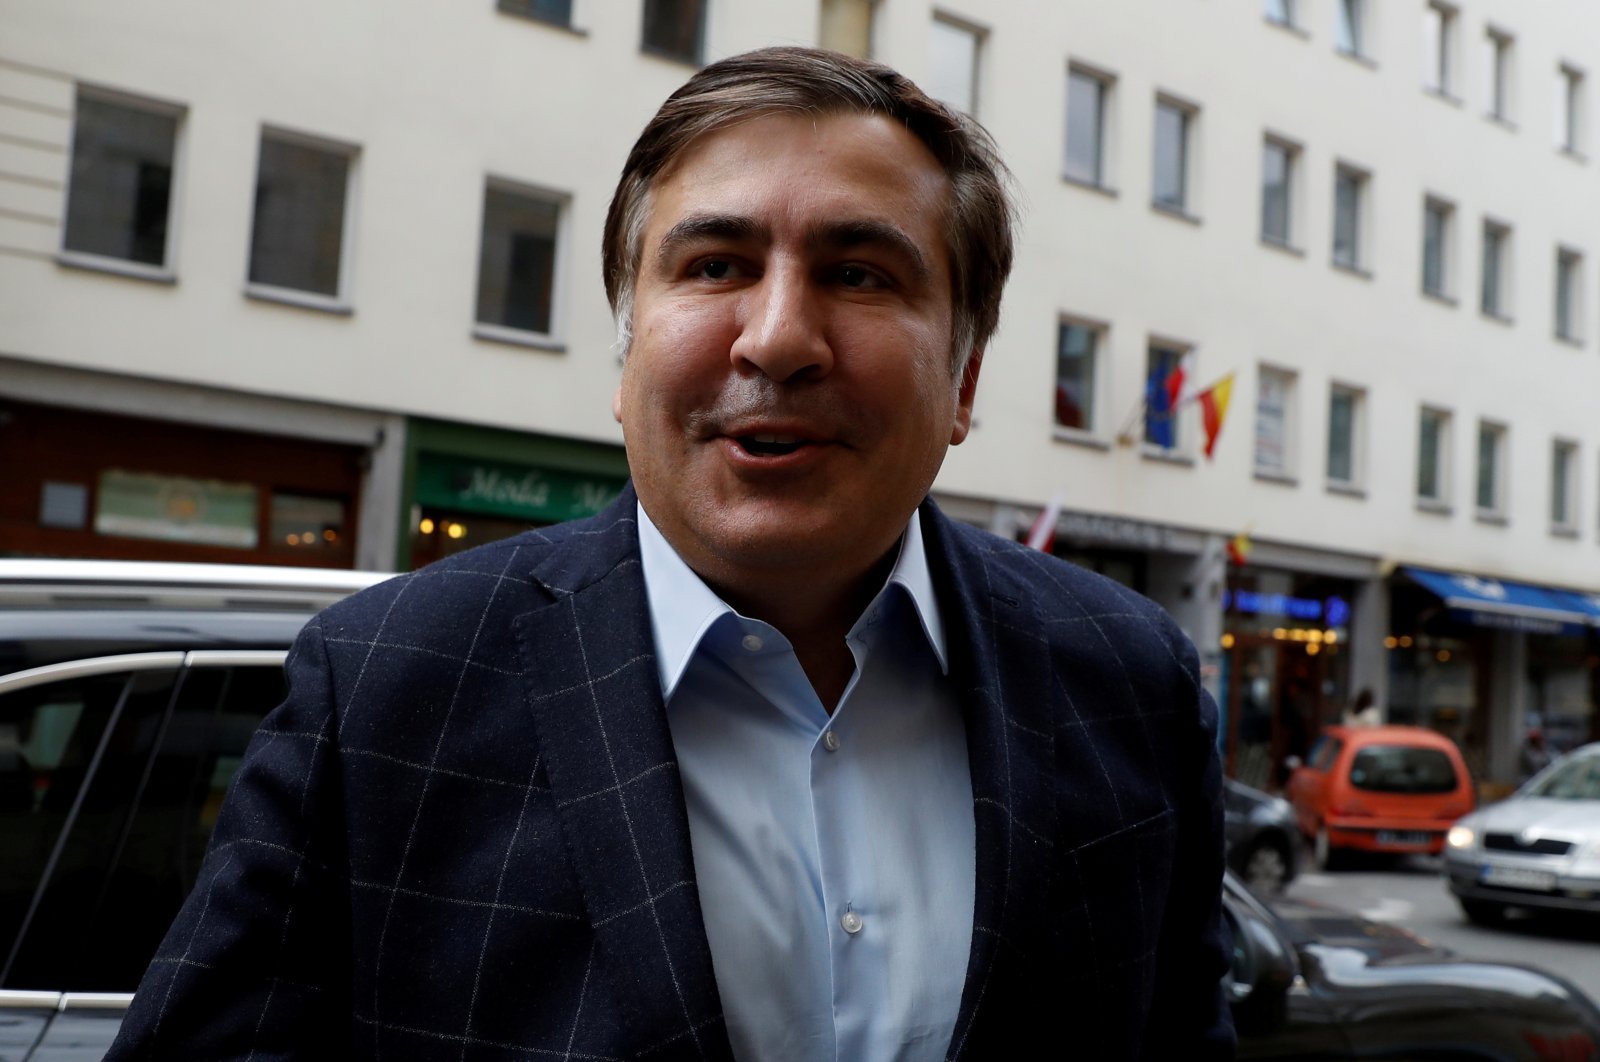 Former Georgian president Mikhail Saakashvili arrives at news conference, Warsaw, Sept. 8, 2017. (REUTERS Photo)